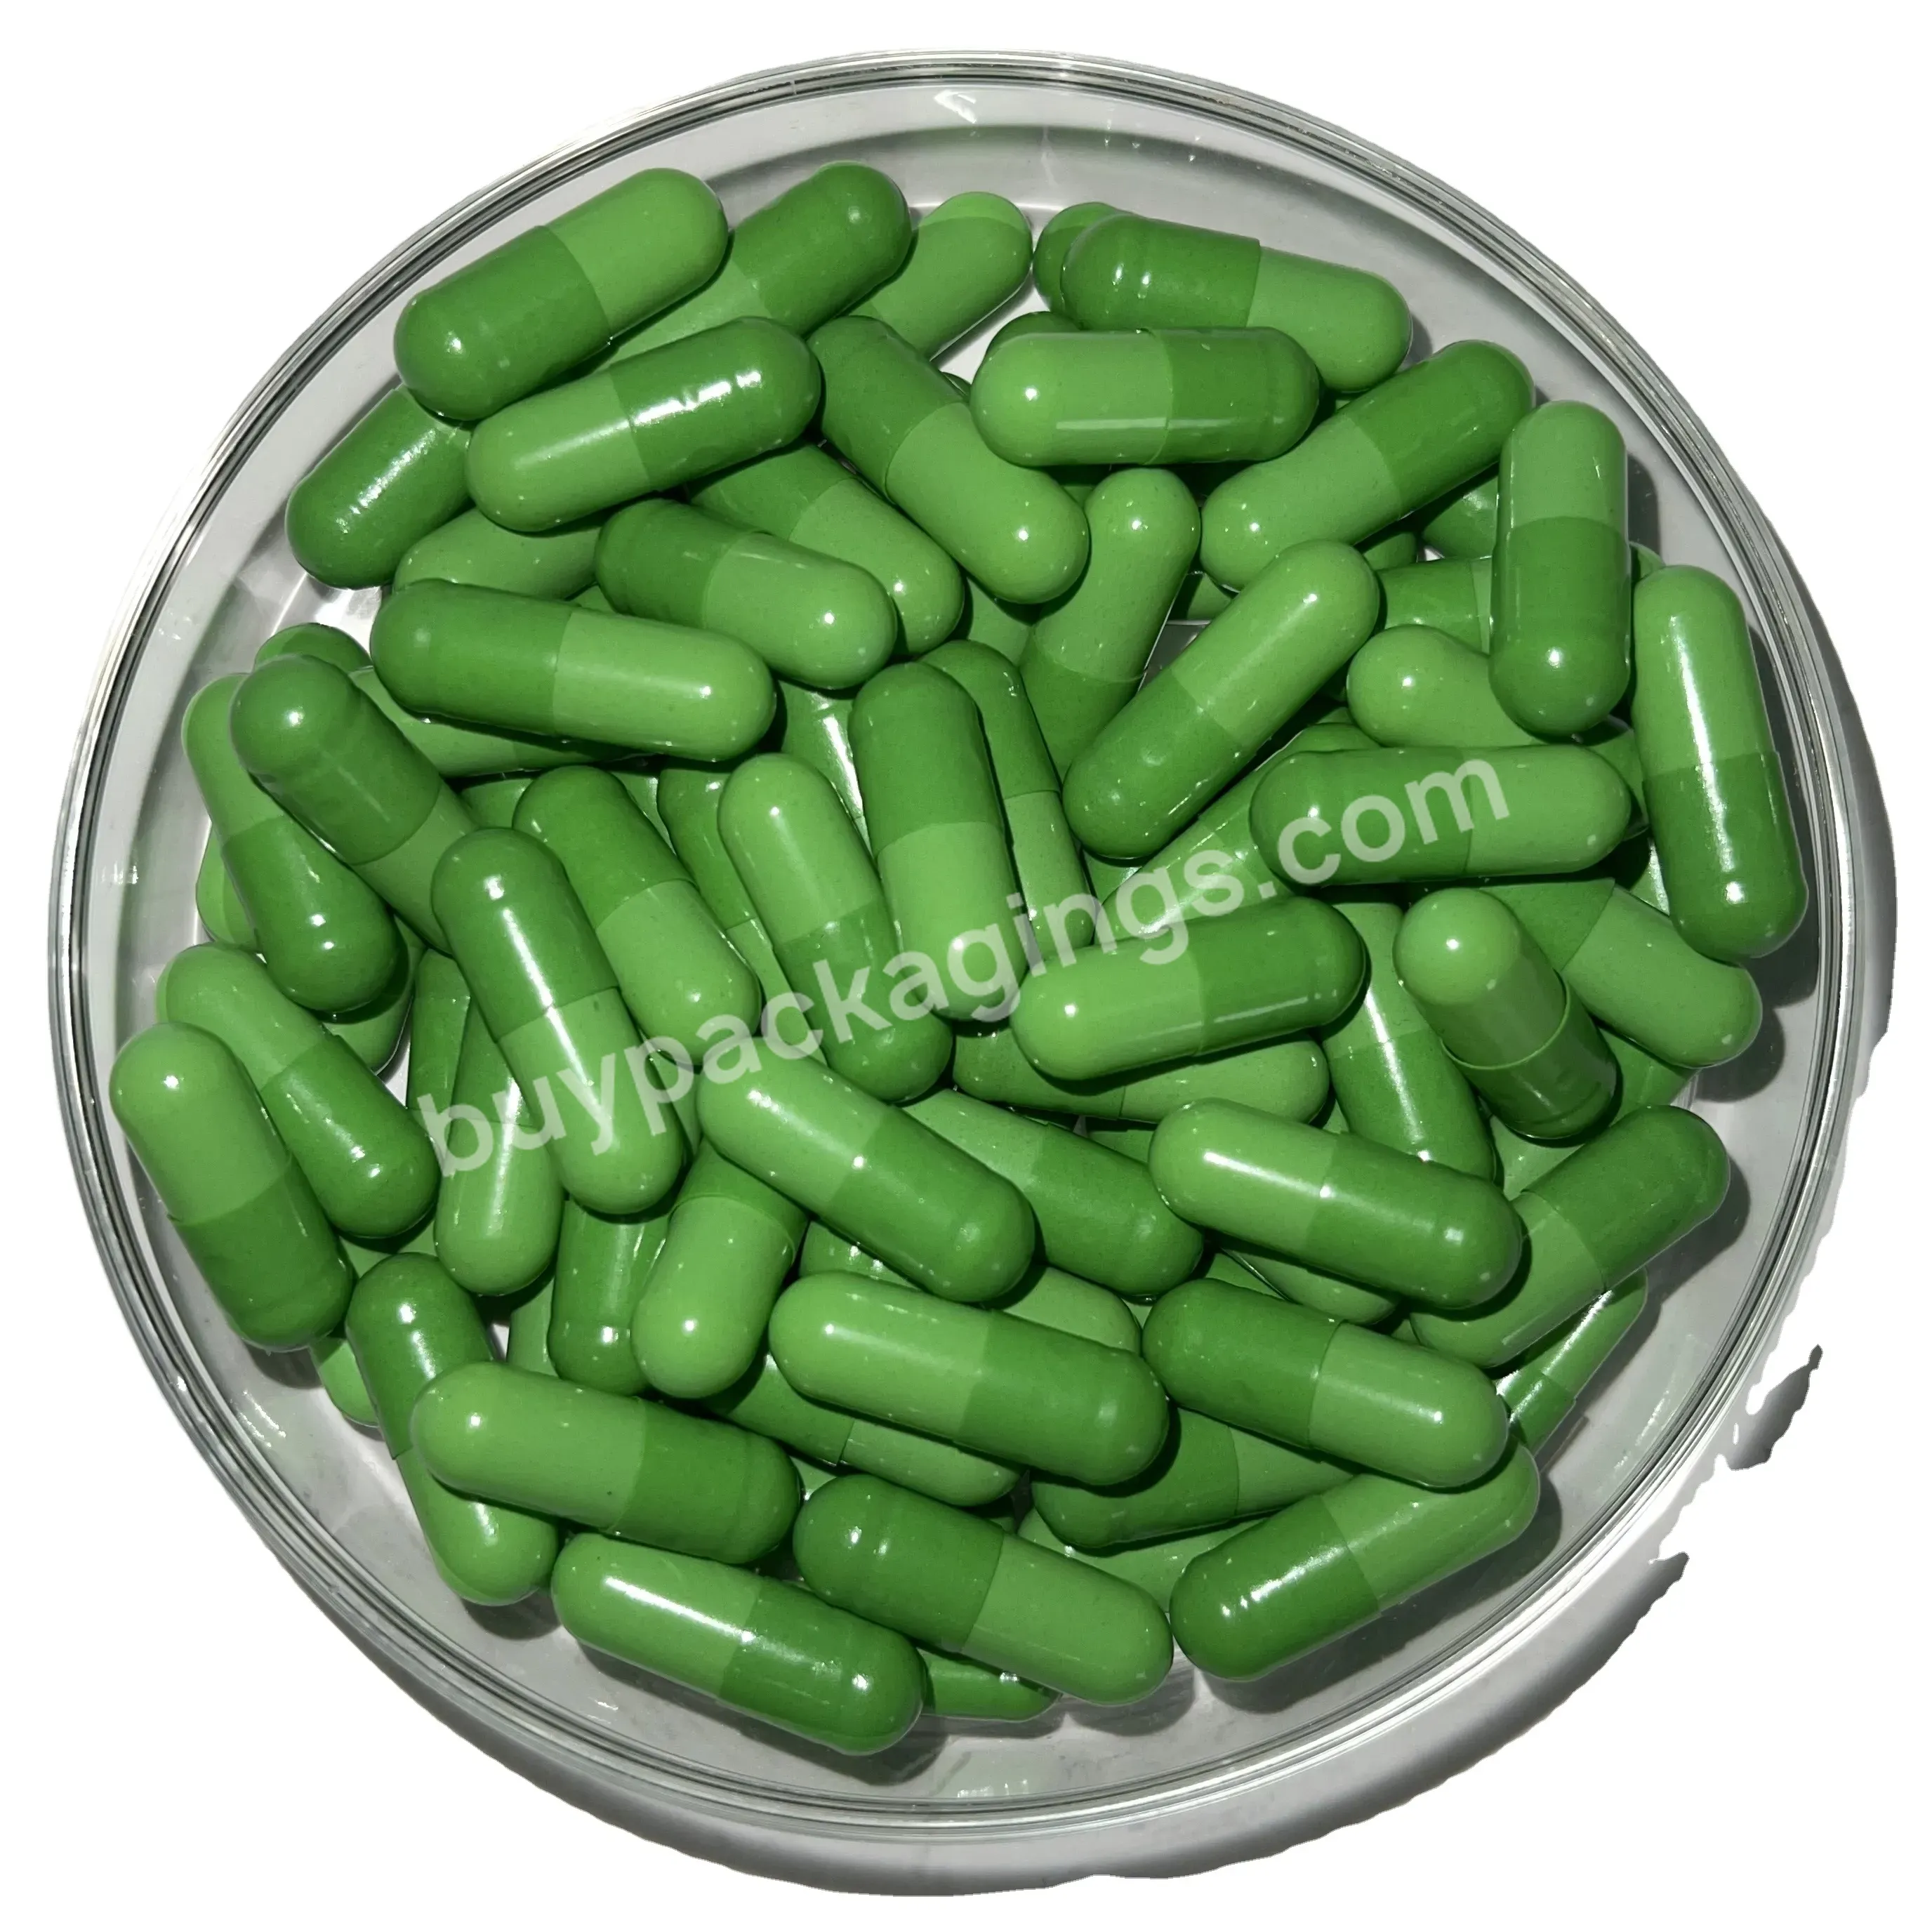 Edible White Hollow Hard Gelatin Capsules Pill Size 0 For Medicine Powder - Buy Gelatin Capsules Pill,White Hollow Hard Capsules,0 Medicine Capsules.